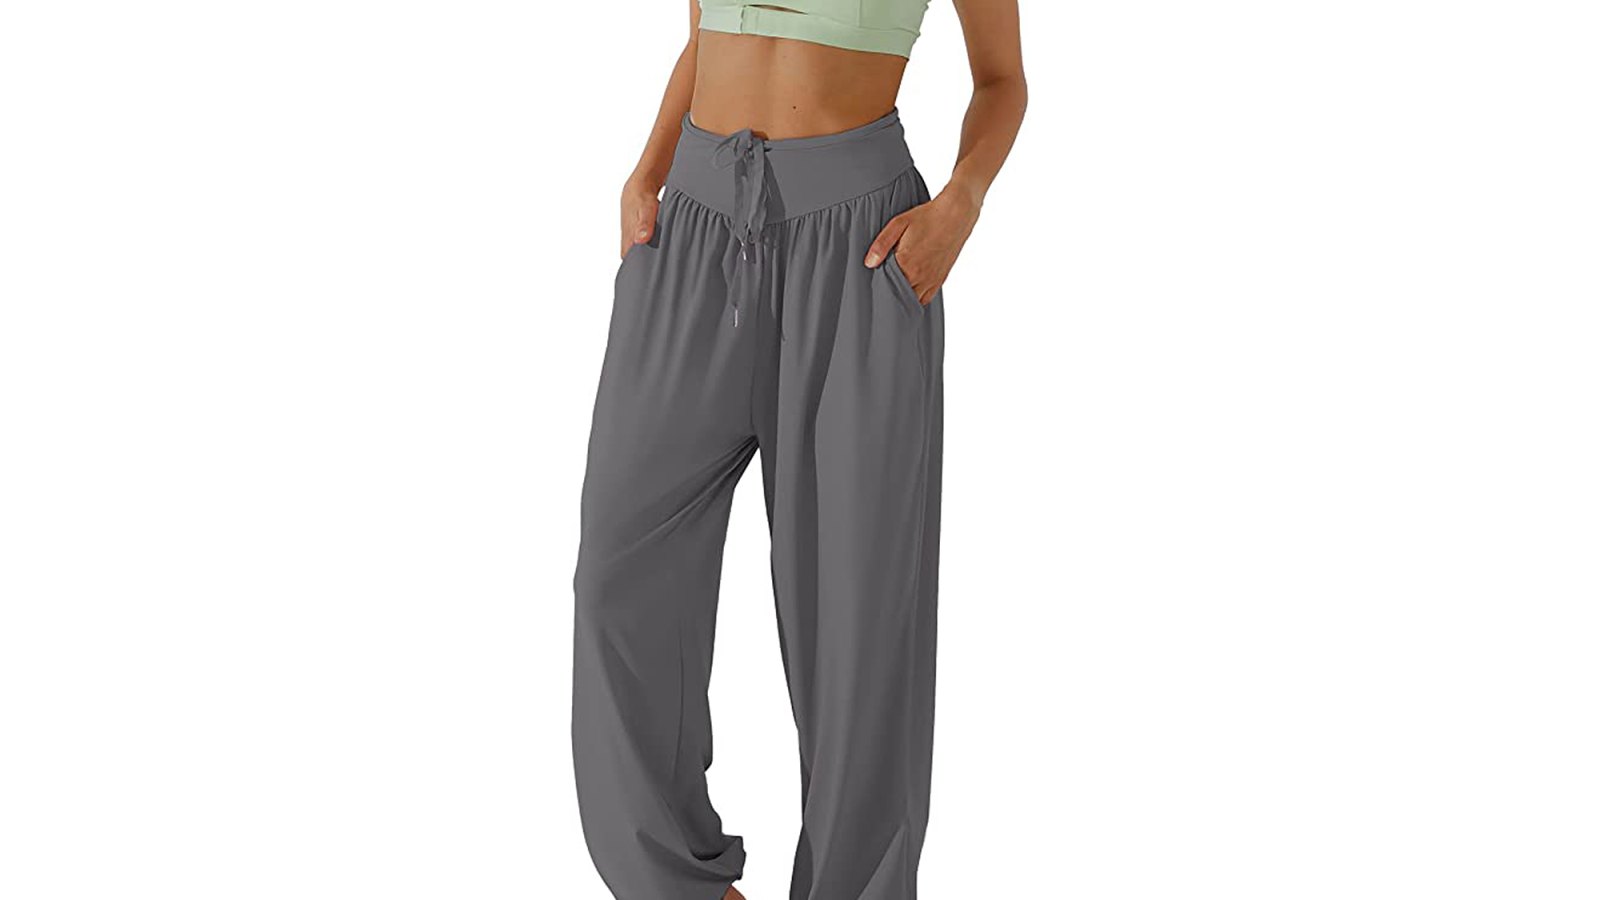 Fozala Yoga Pants May Be the Most Comfortable Sweats Around | Us Weekly